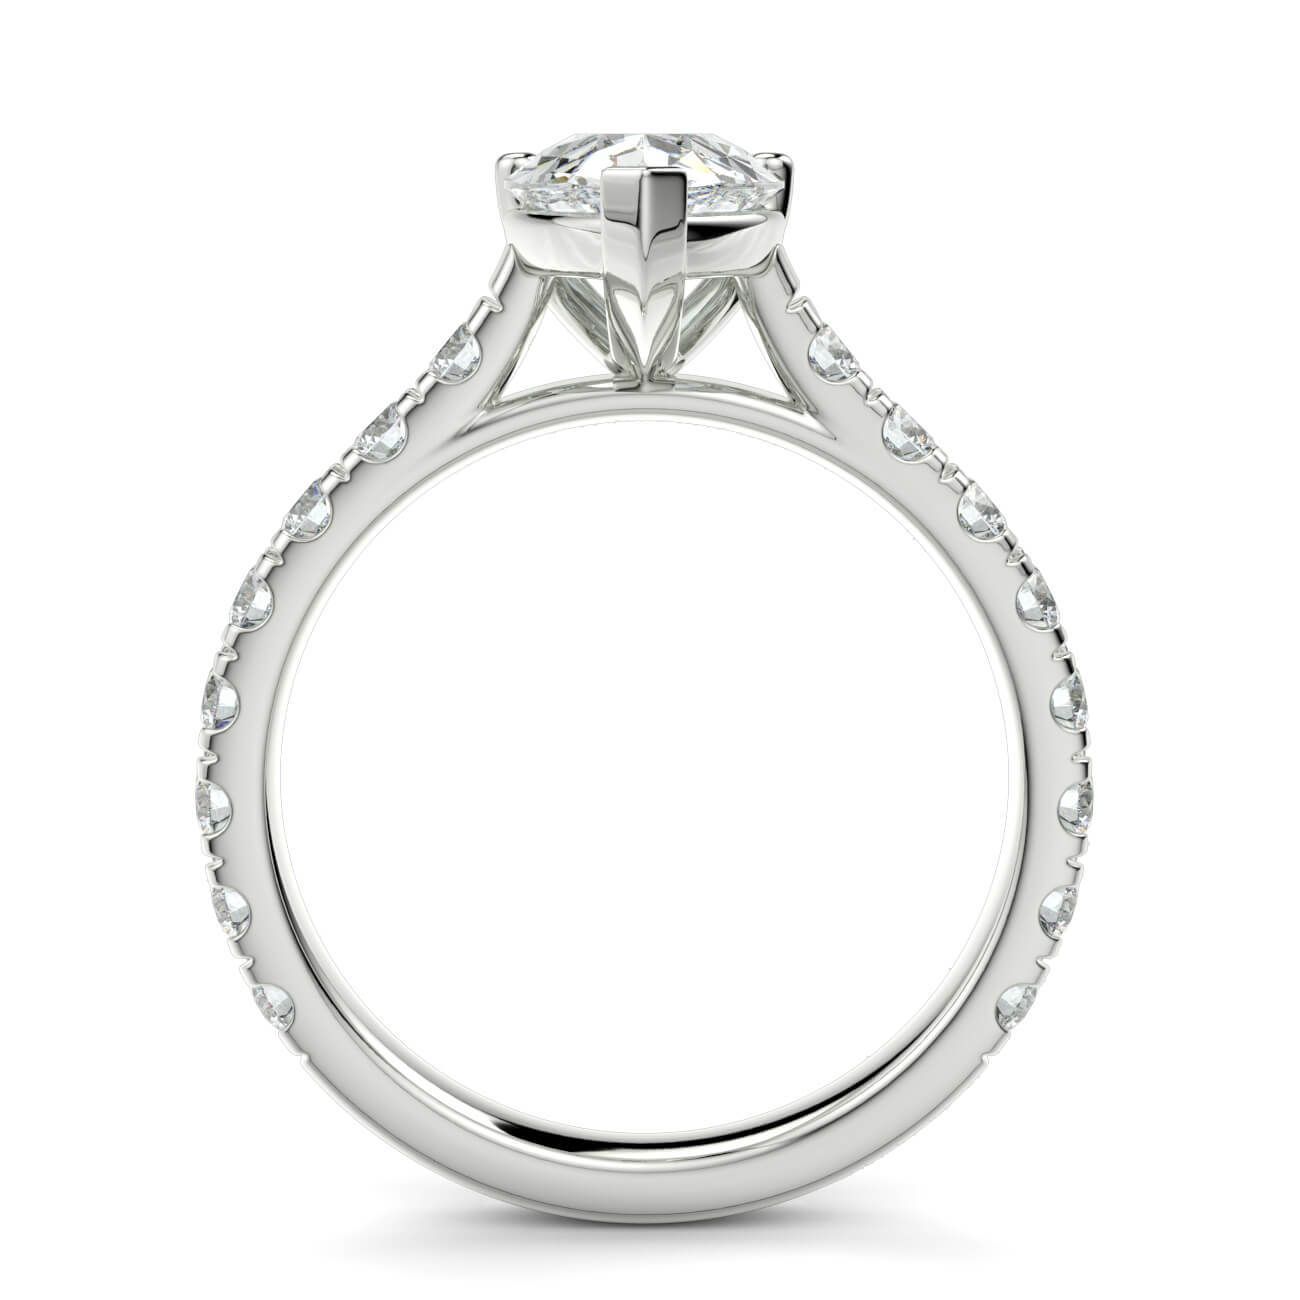 Prestige Pear Cut Diamond Engagement Ring In White Gold – Australian Diamond Network